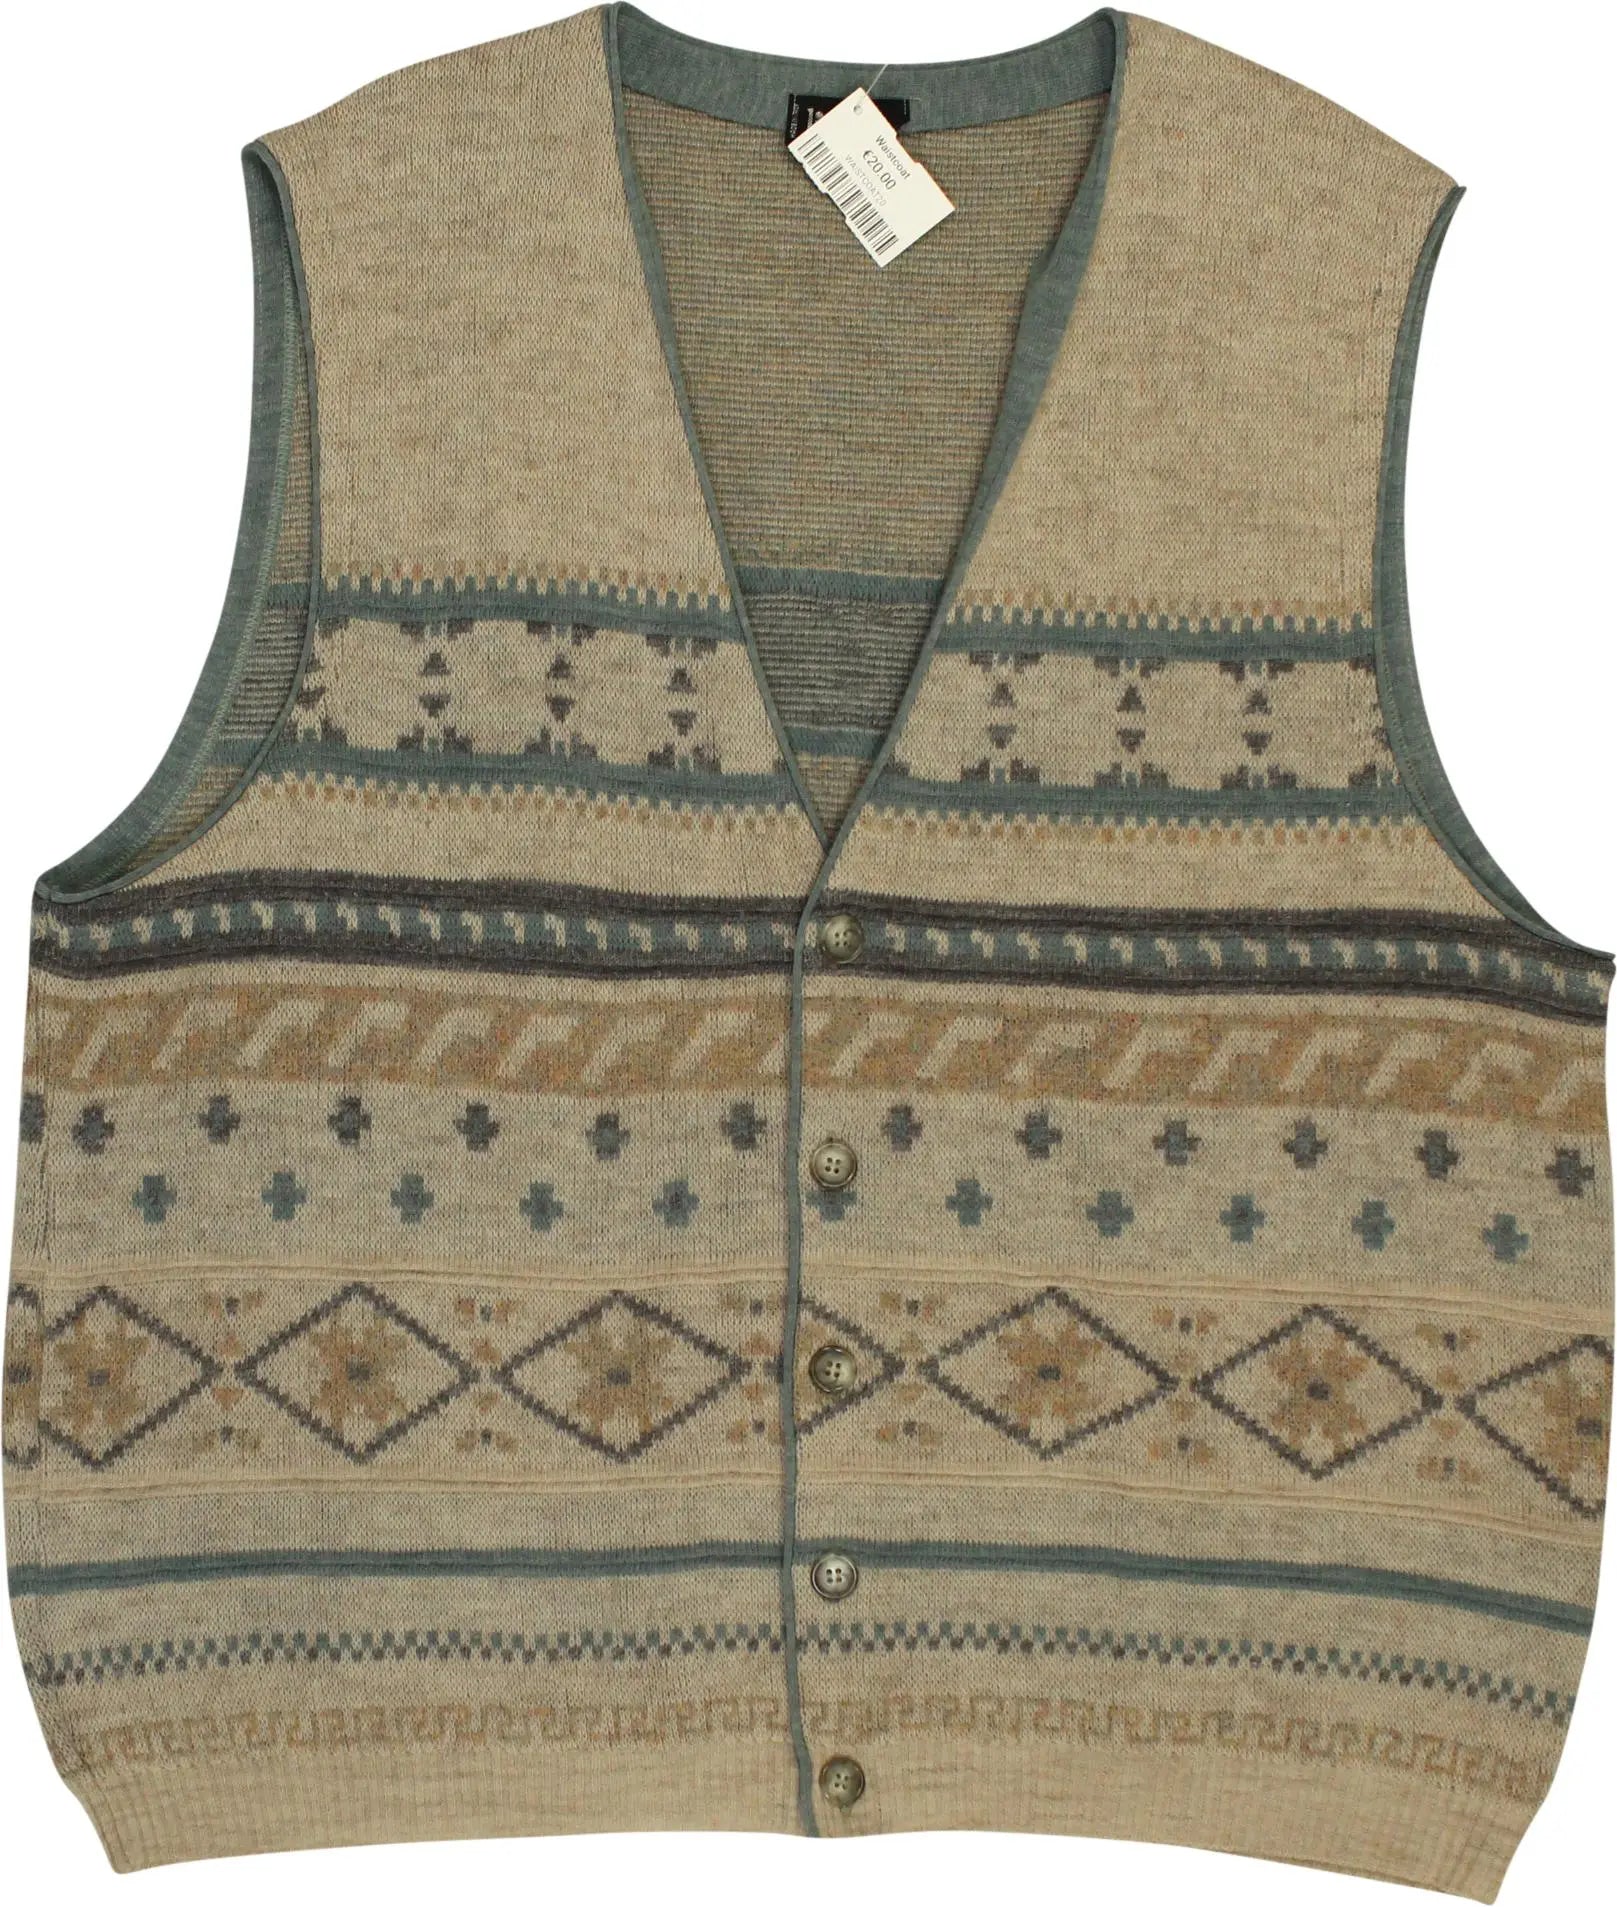 Liabel - 90's Vest- ThriftTale.com - Vintage and second handclothing